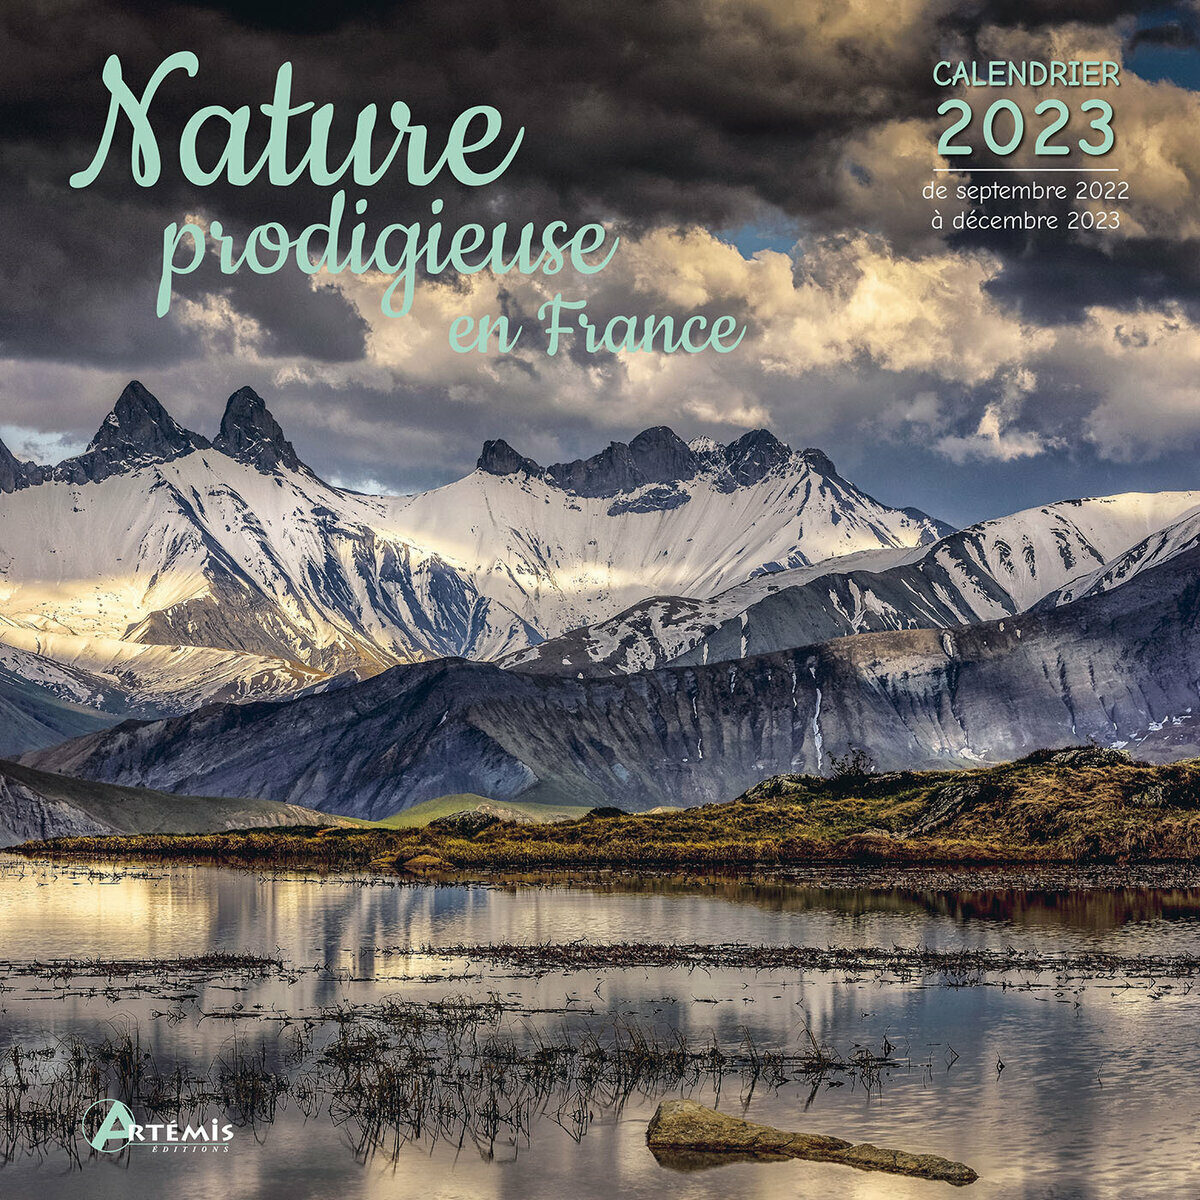 Calendrier 2023 Nature prodigieuse